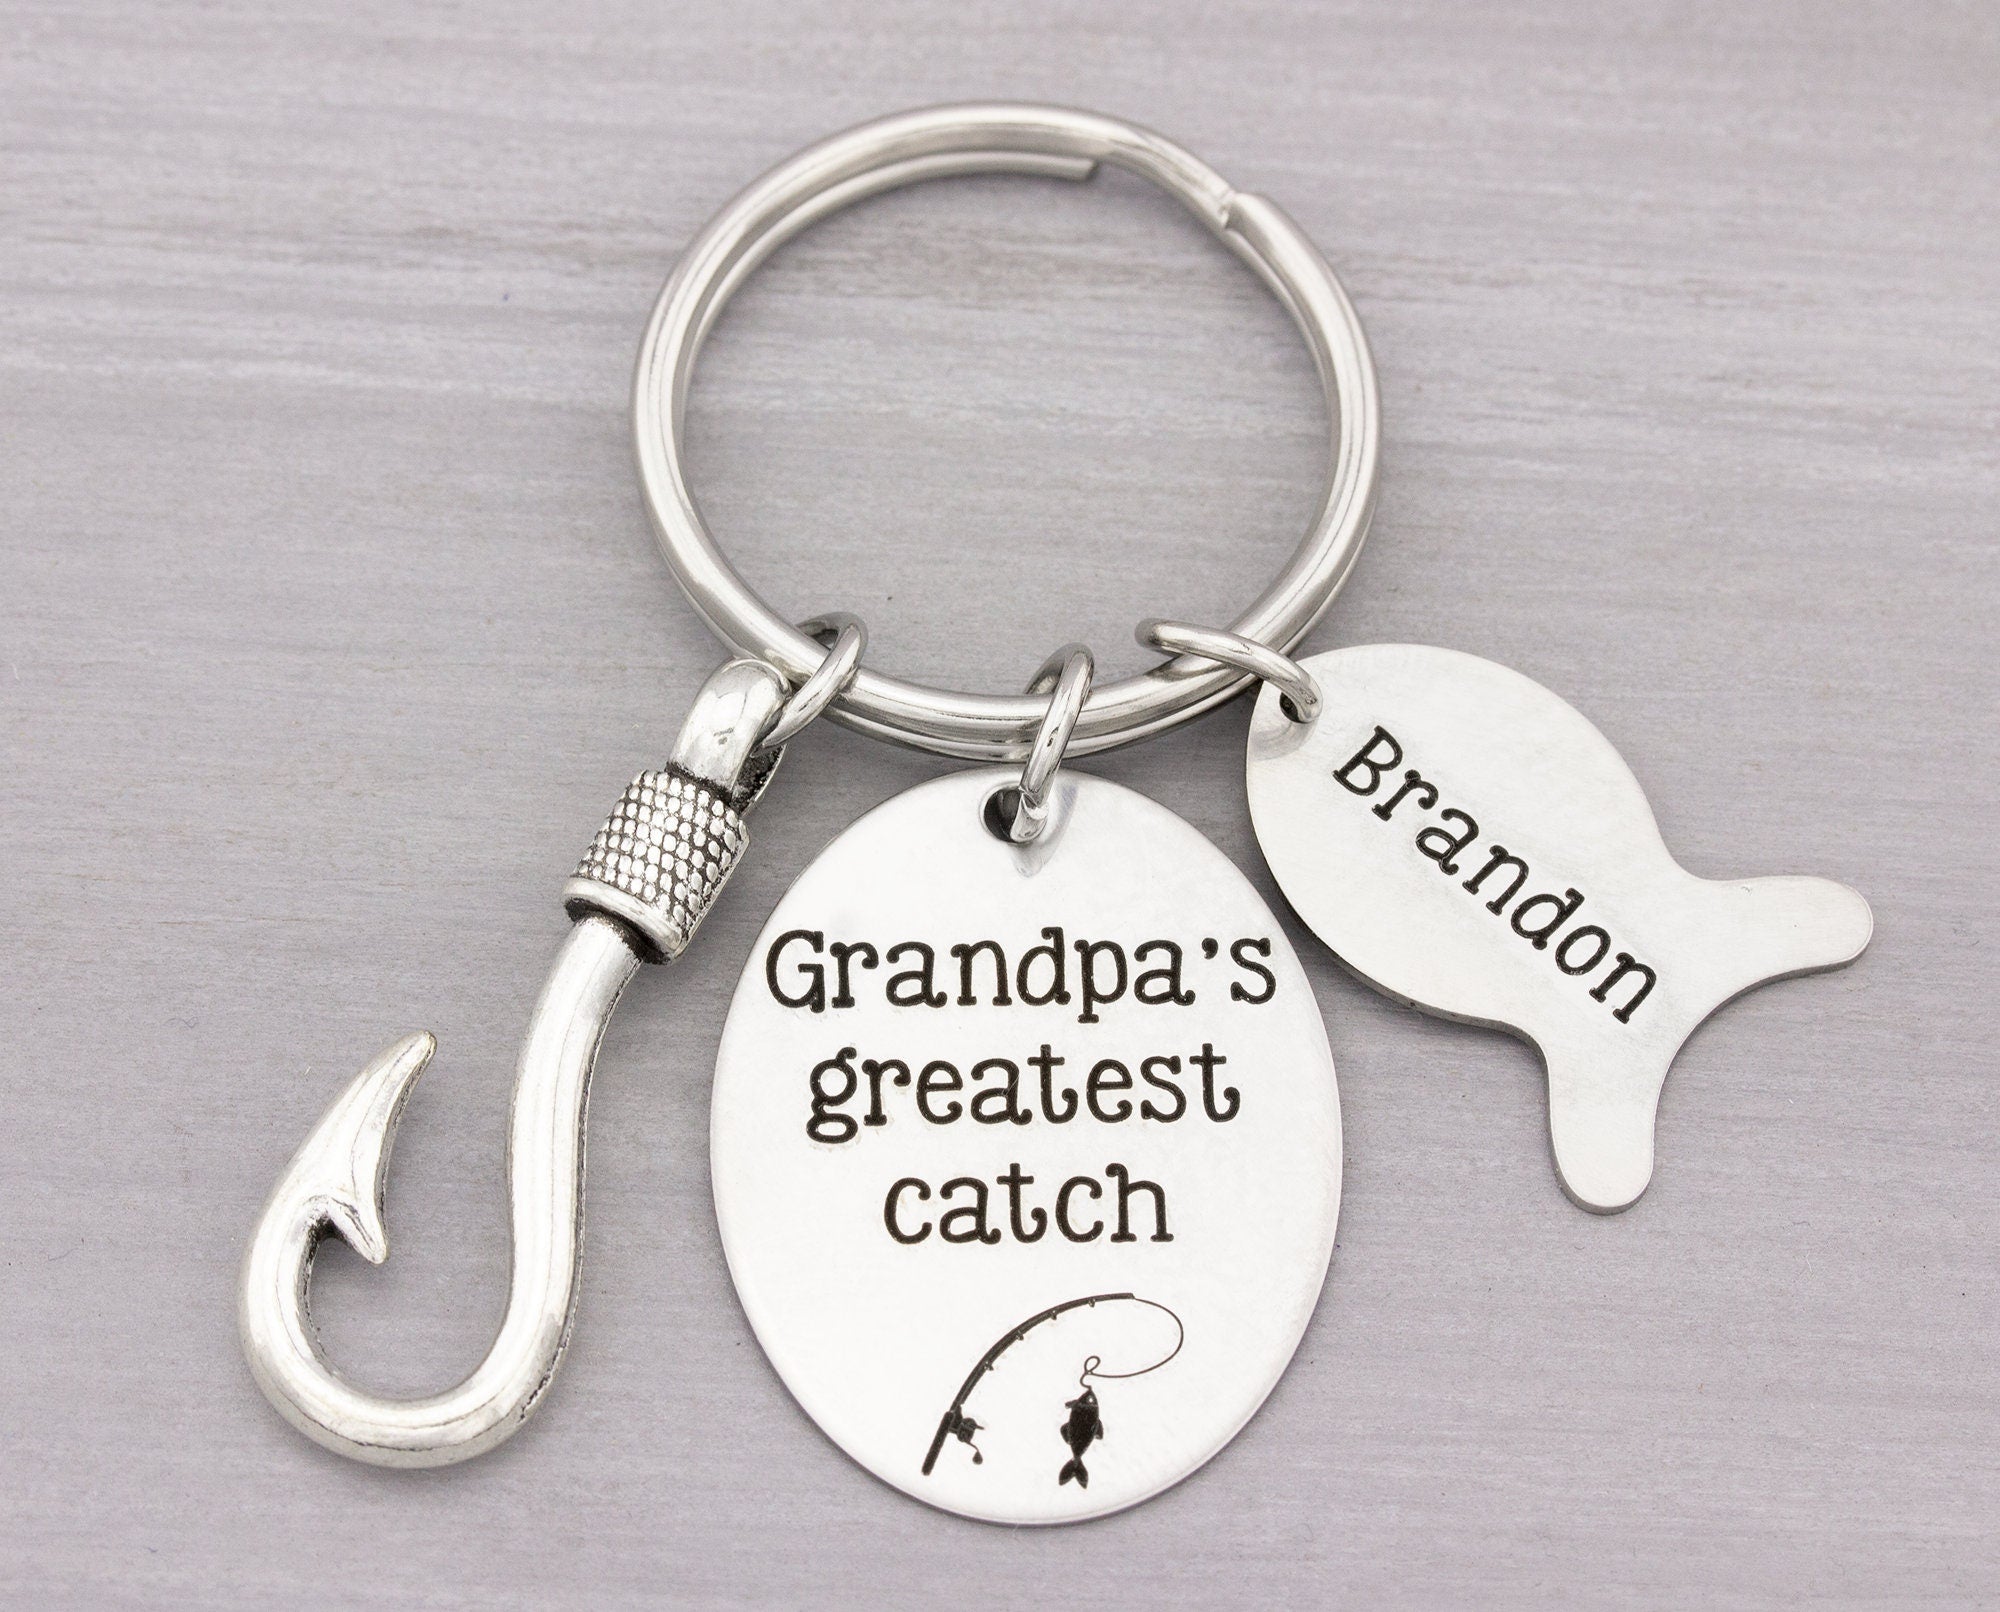 Personalized Fishing Key Chain Gift